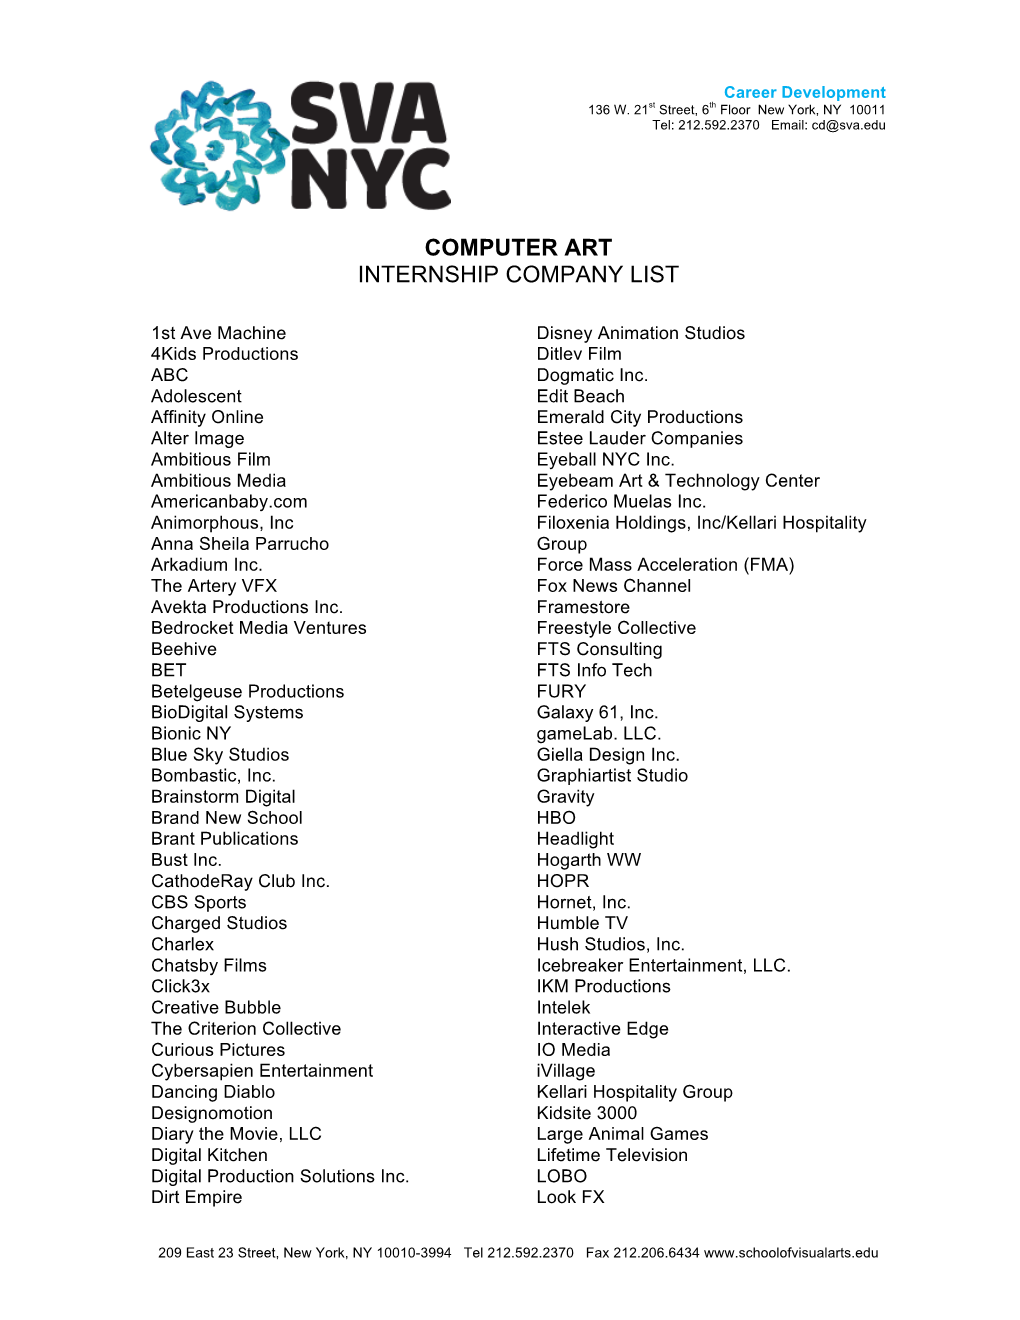 Computer Art Internship Company List